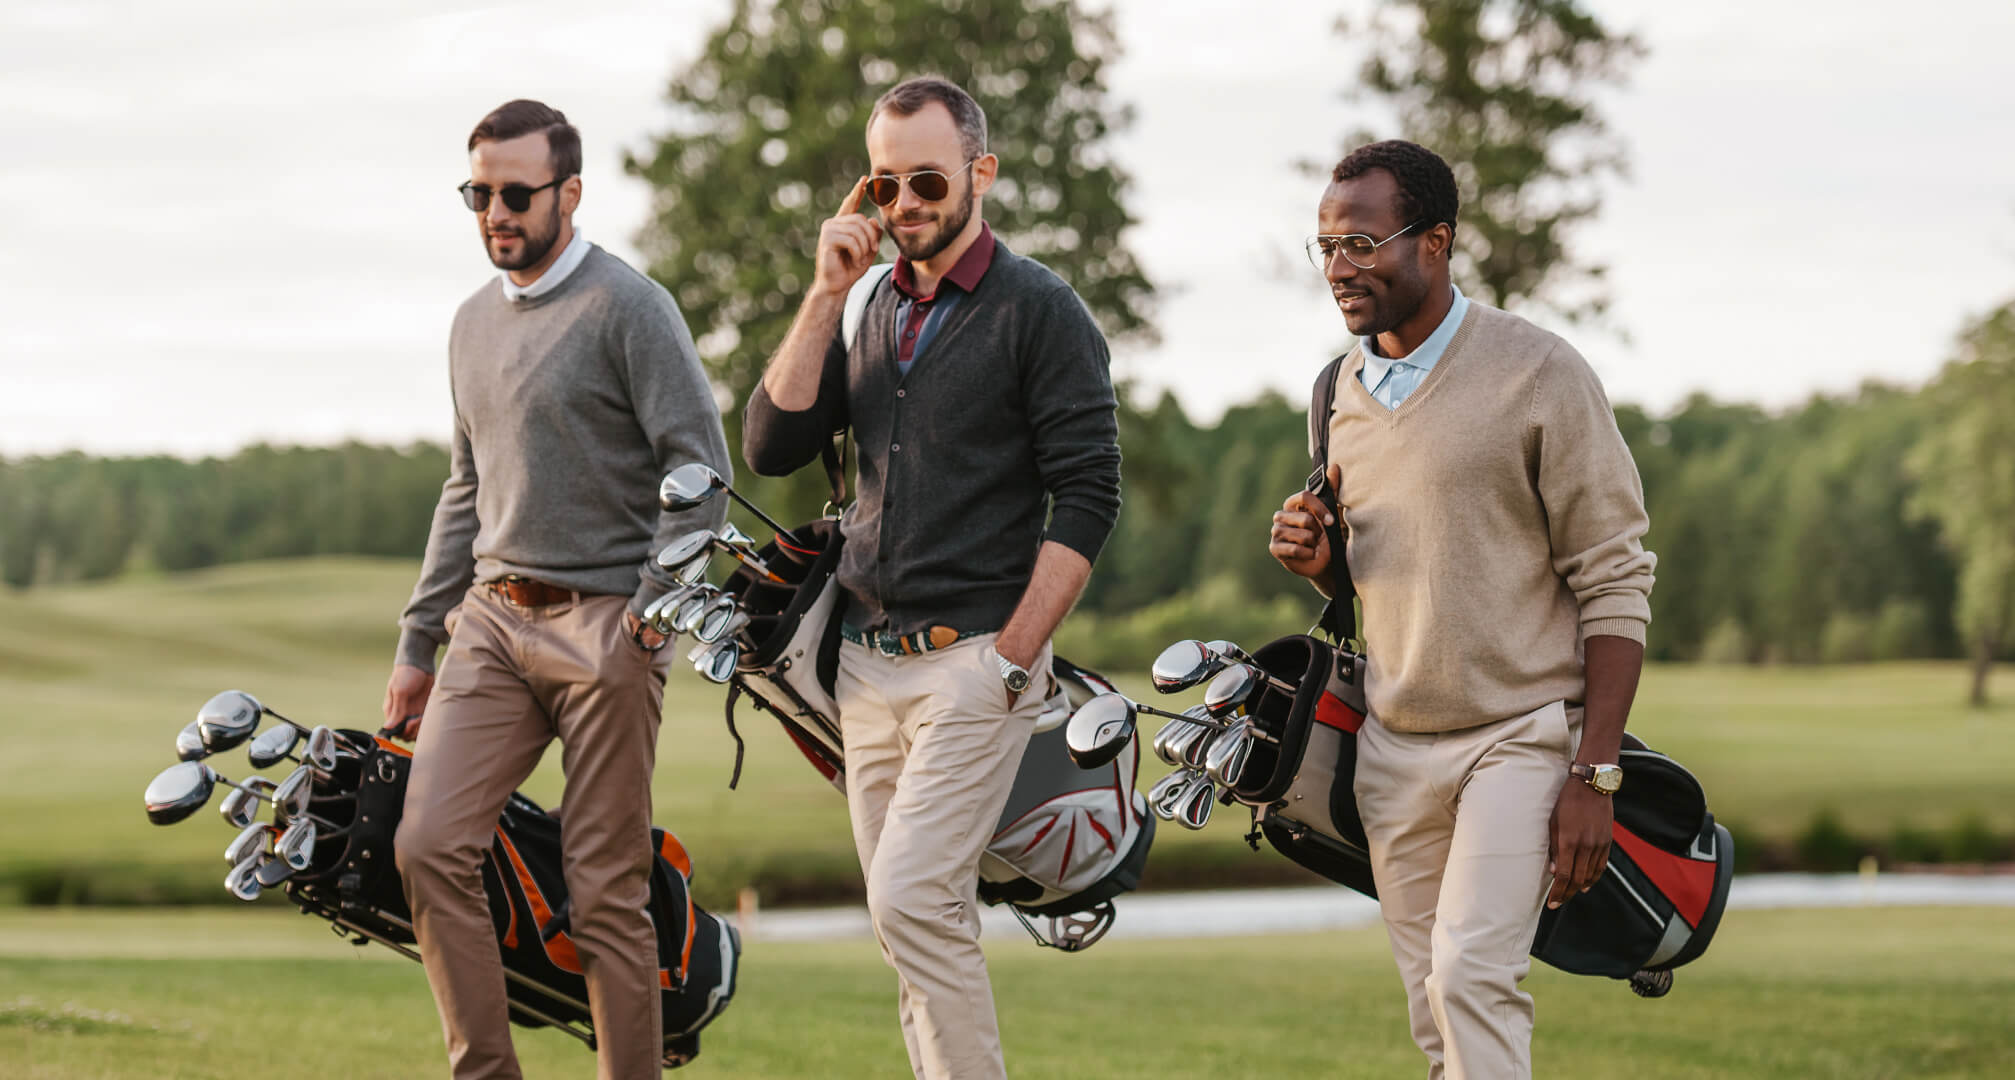 tre personer spiller golf med solbriller og golfbags